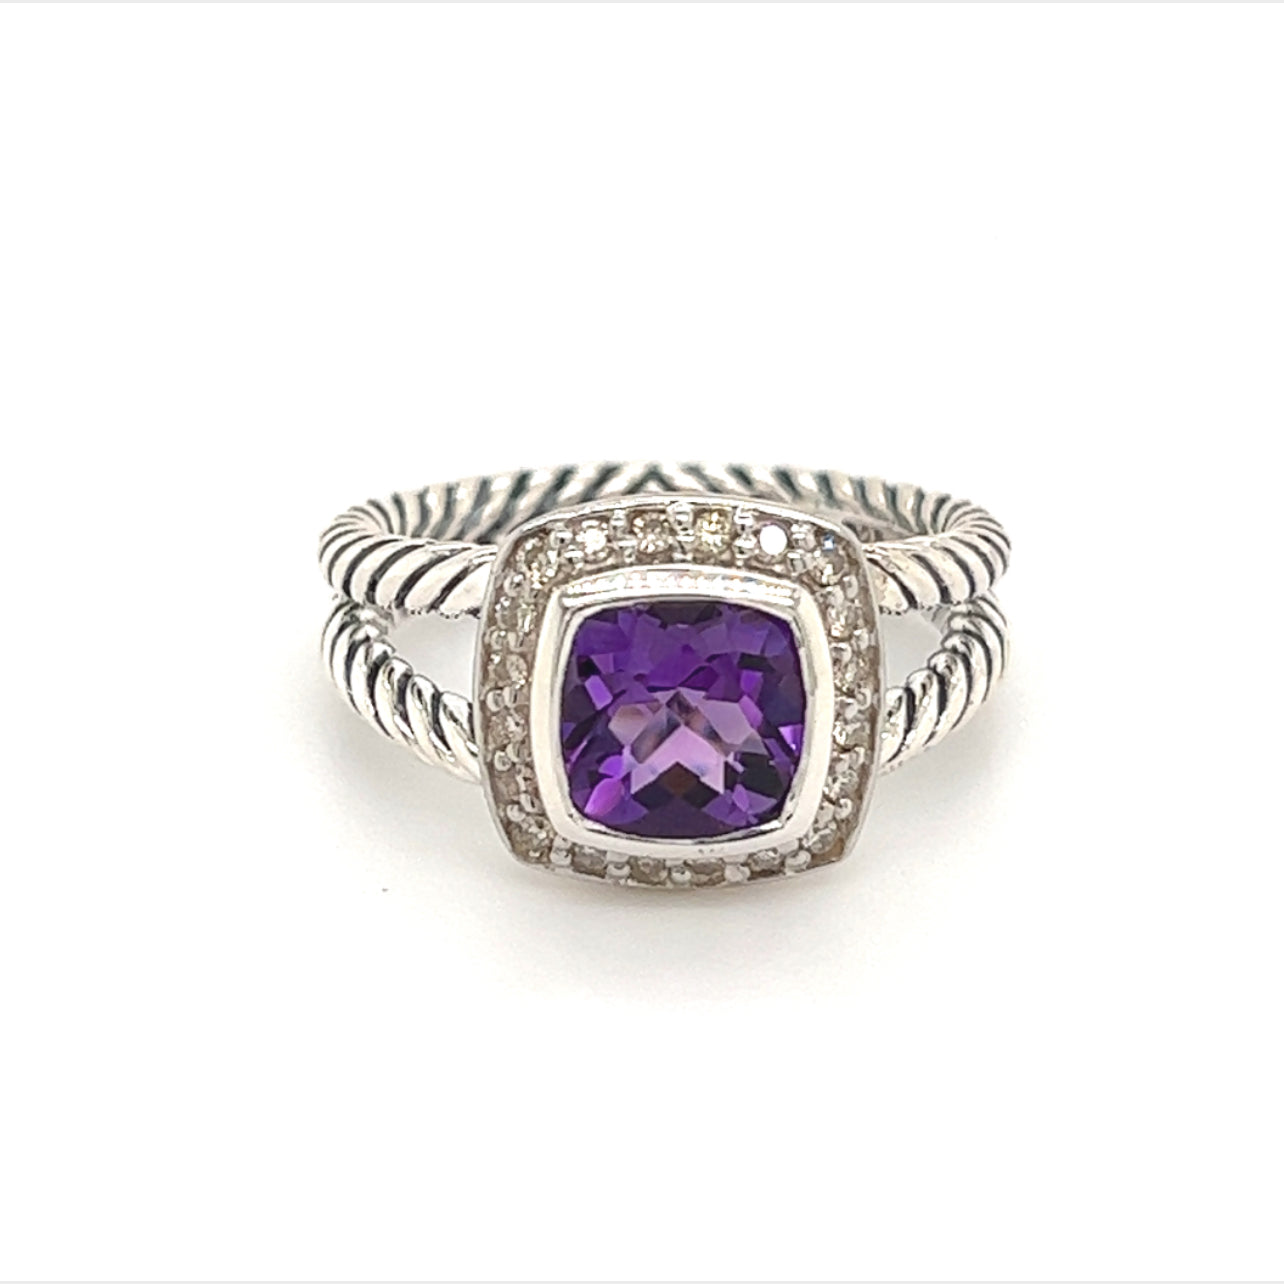 David Yurman Authentic Estate Diamond Petite Albion Amethyst Ring Size 6.5 Sil 1.67 TCW DY191 - Certified Fine Jewelry